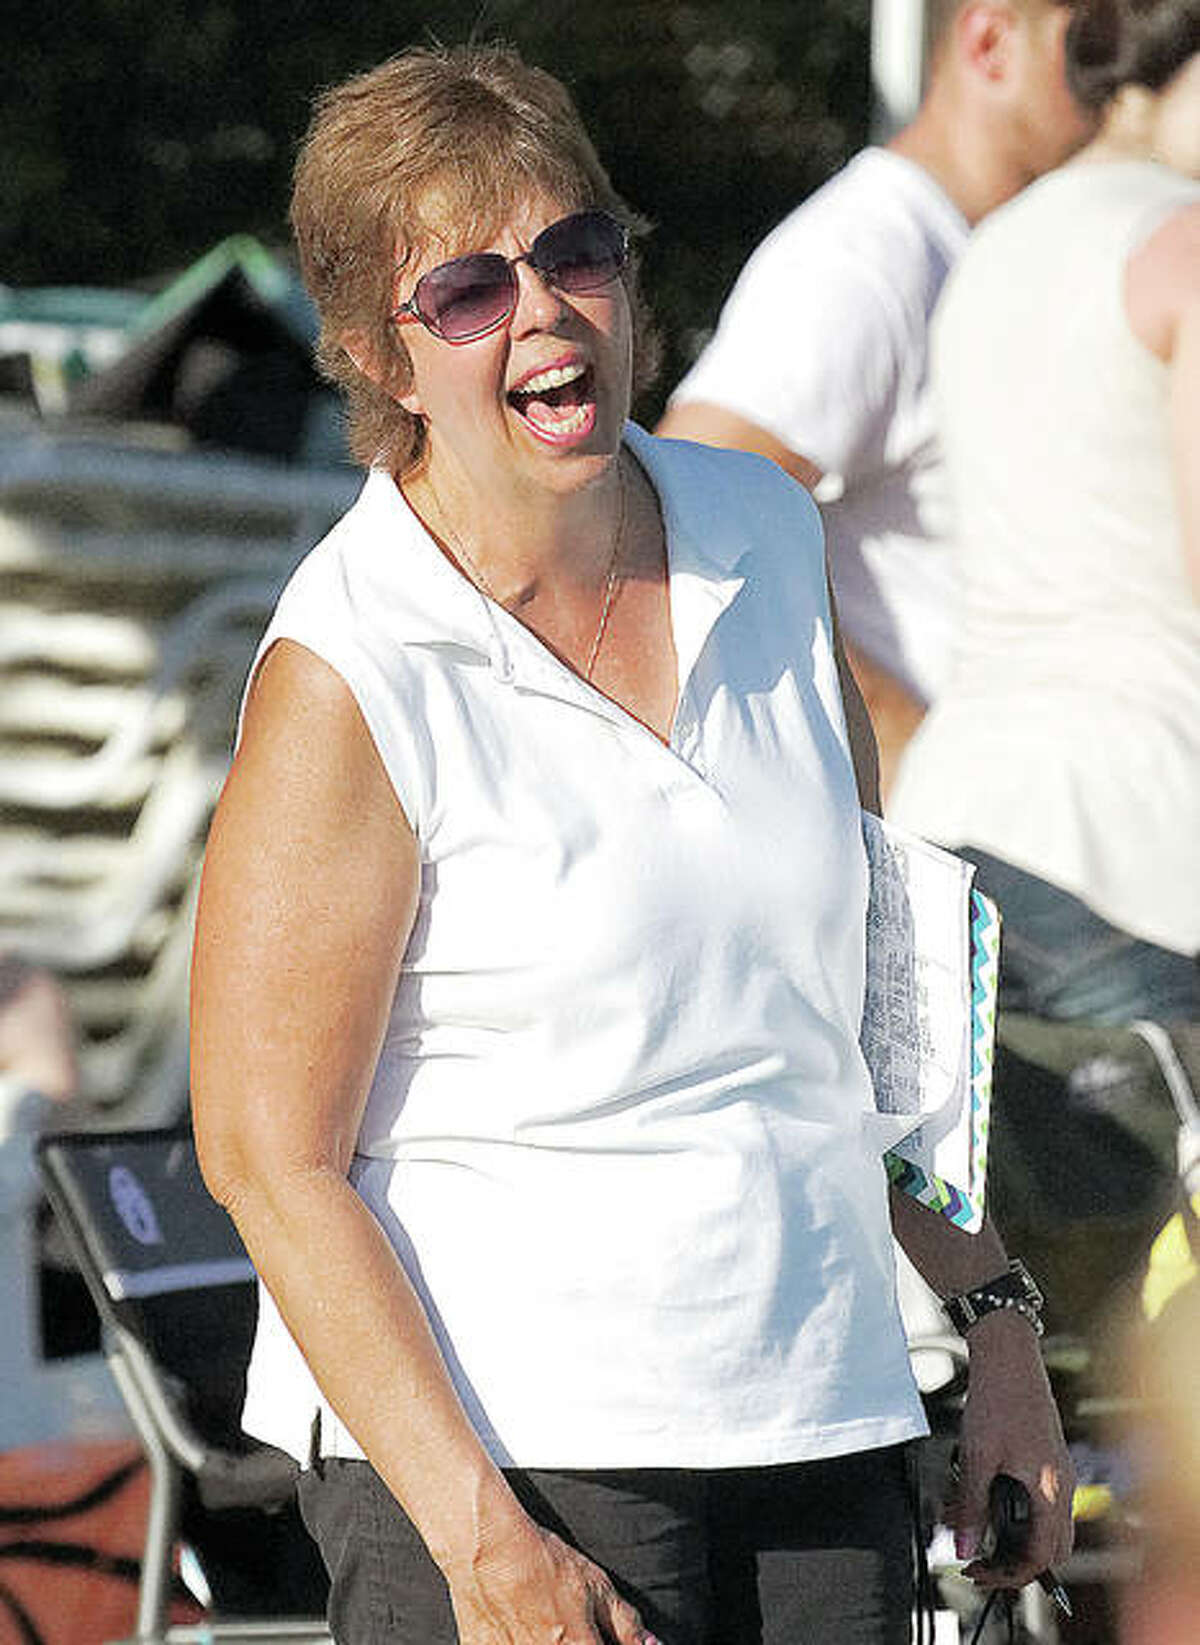 Summers Port coach Nancy Miller’s team defeated the Splash City Gators of Collinsville 399-323 Thursday in Godfrey.